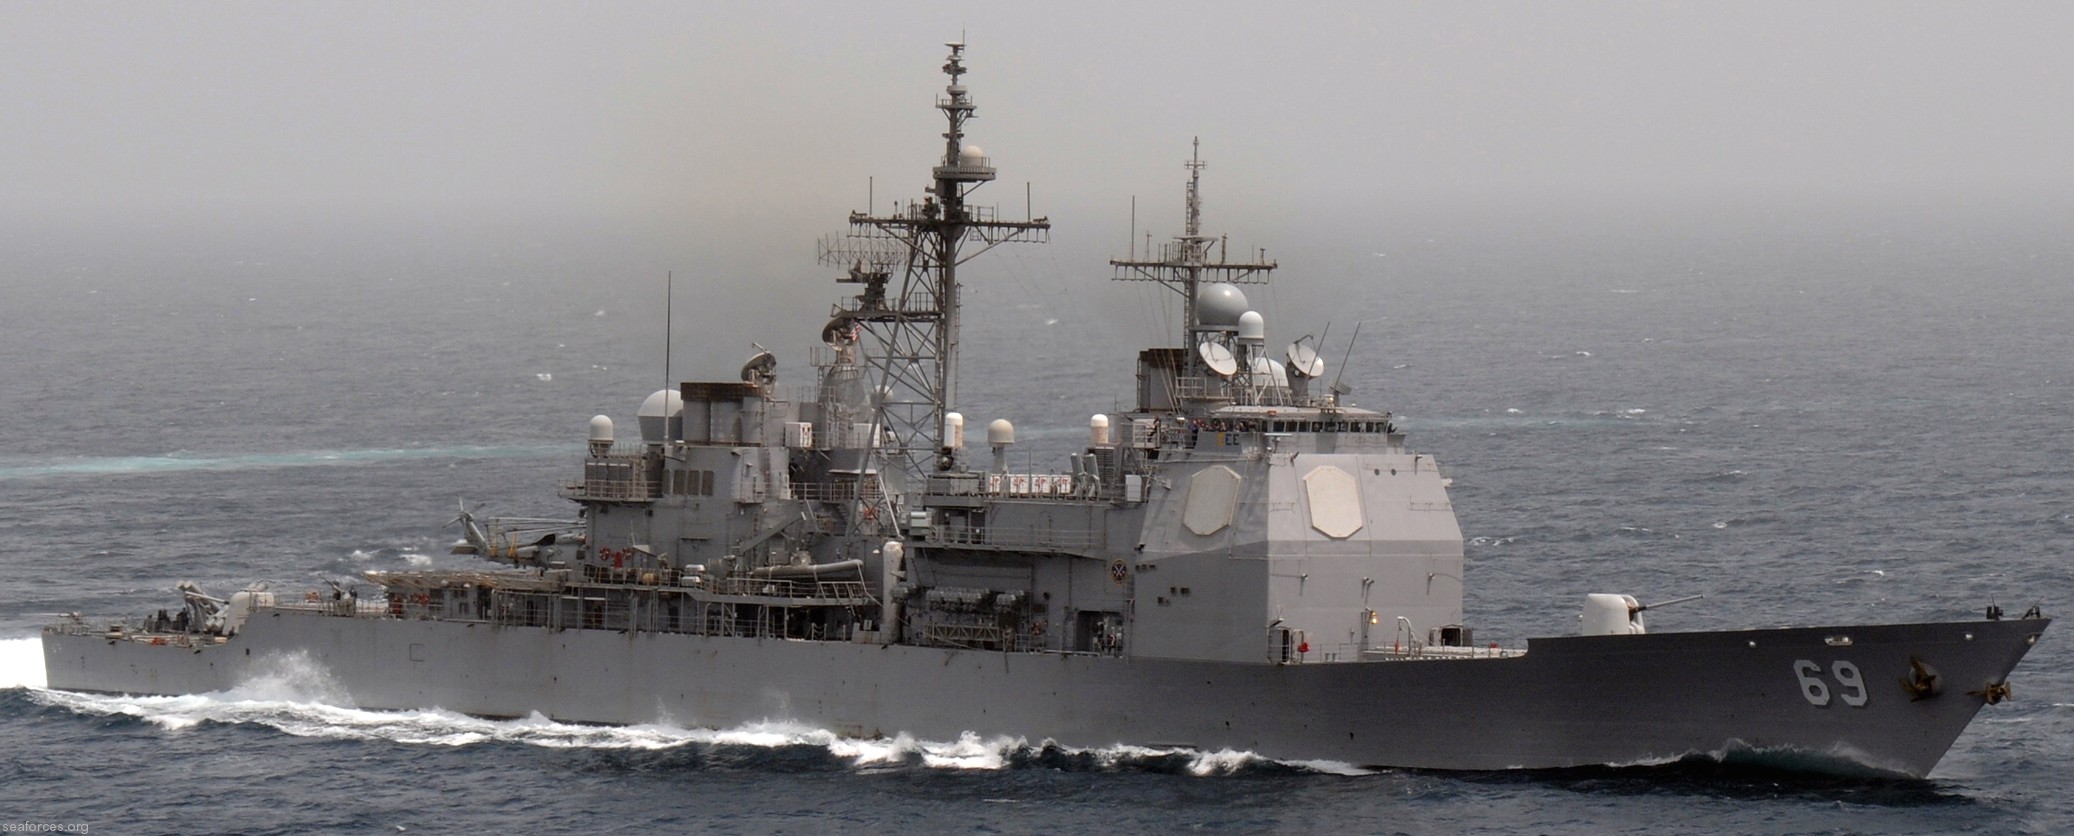 cg-69 uss vicksburg ticonderoga class guided missile cruiser us navy 31